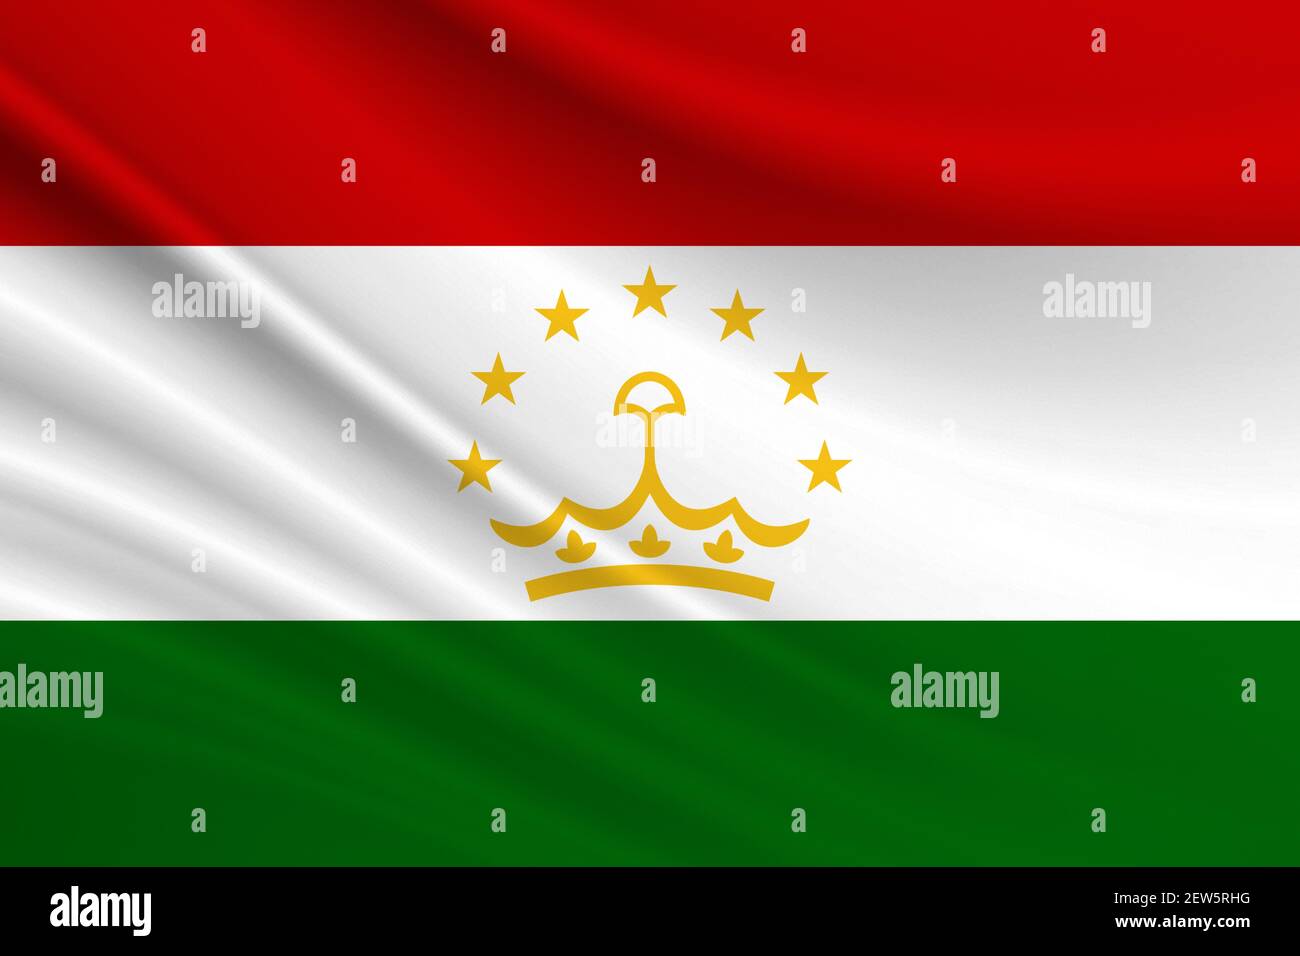 Flag of Tajikistan. Fabric texture of the flag of Tajikistan. Stock Photo